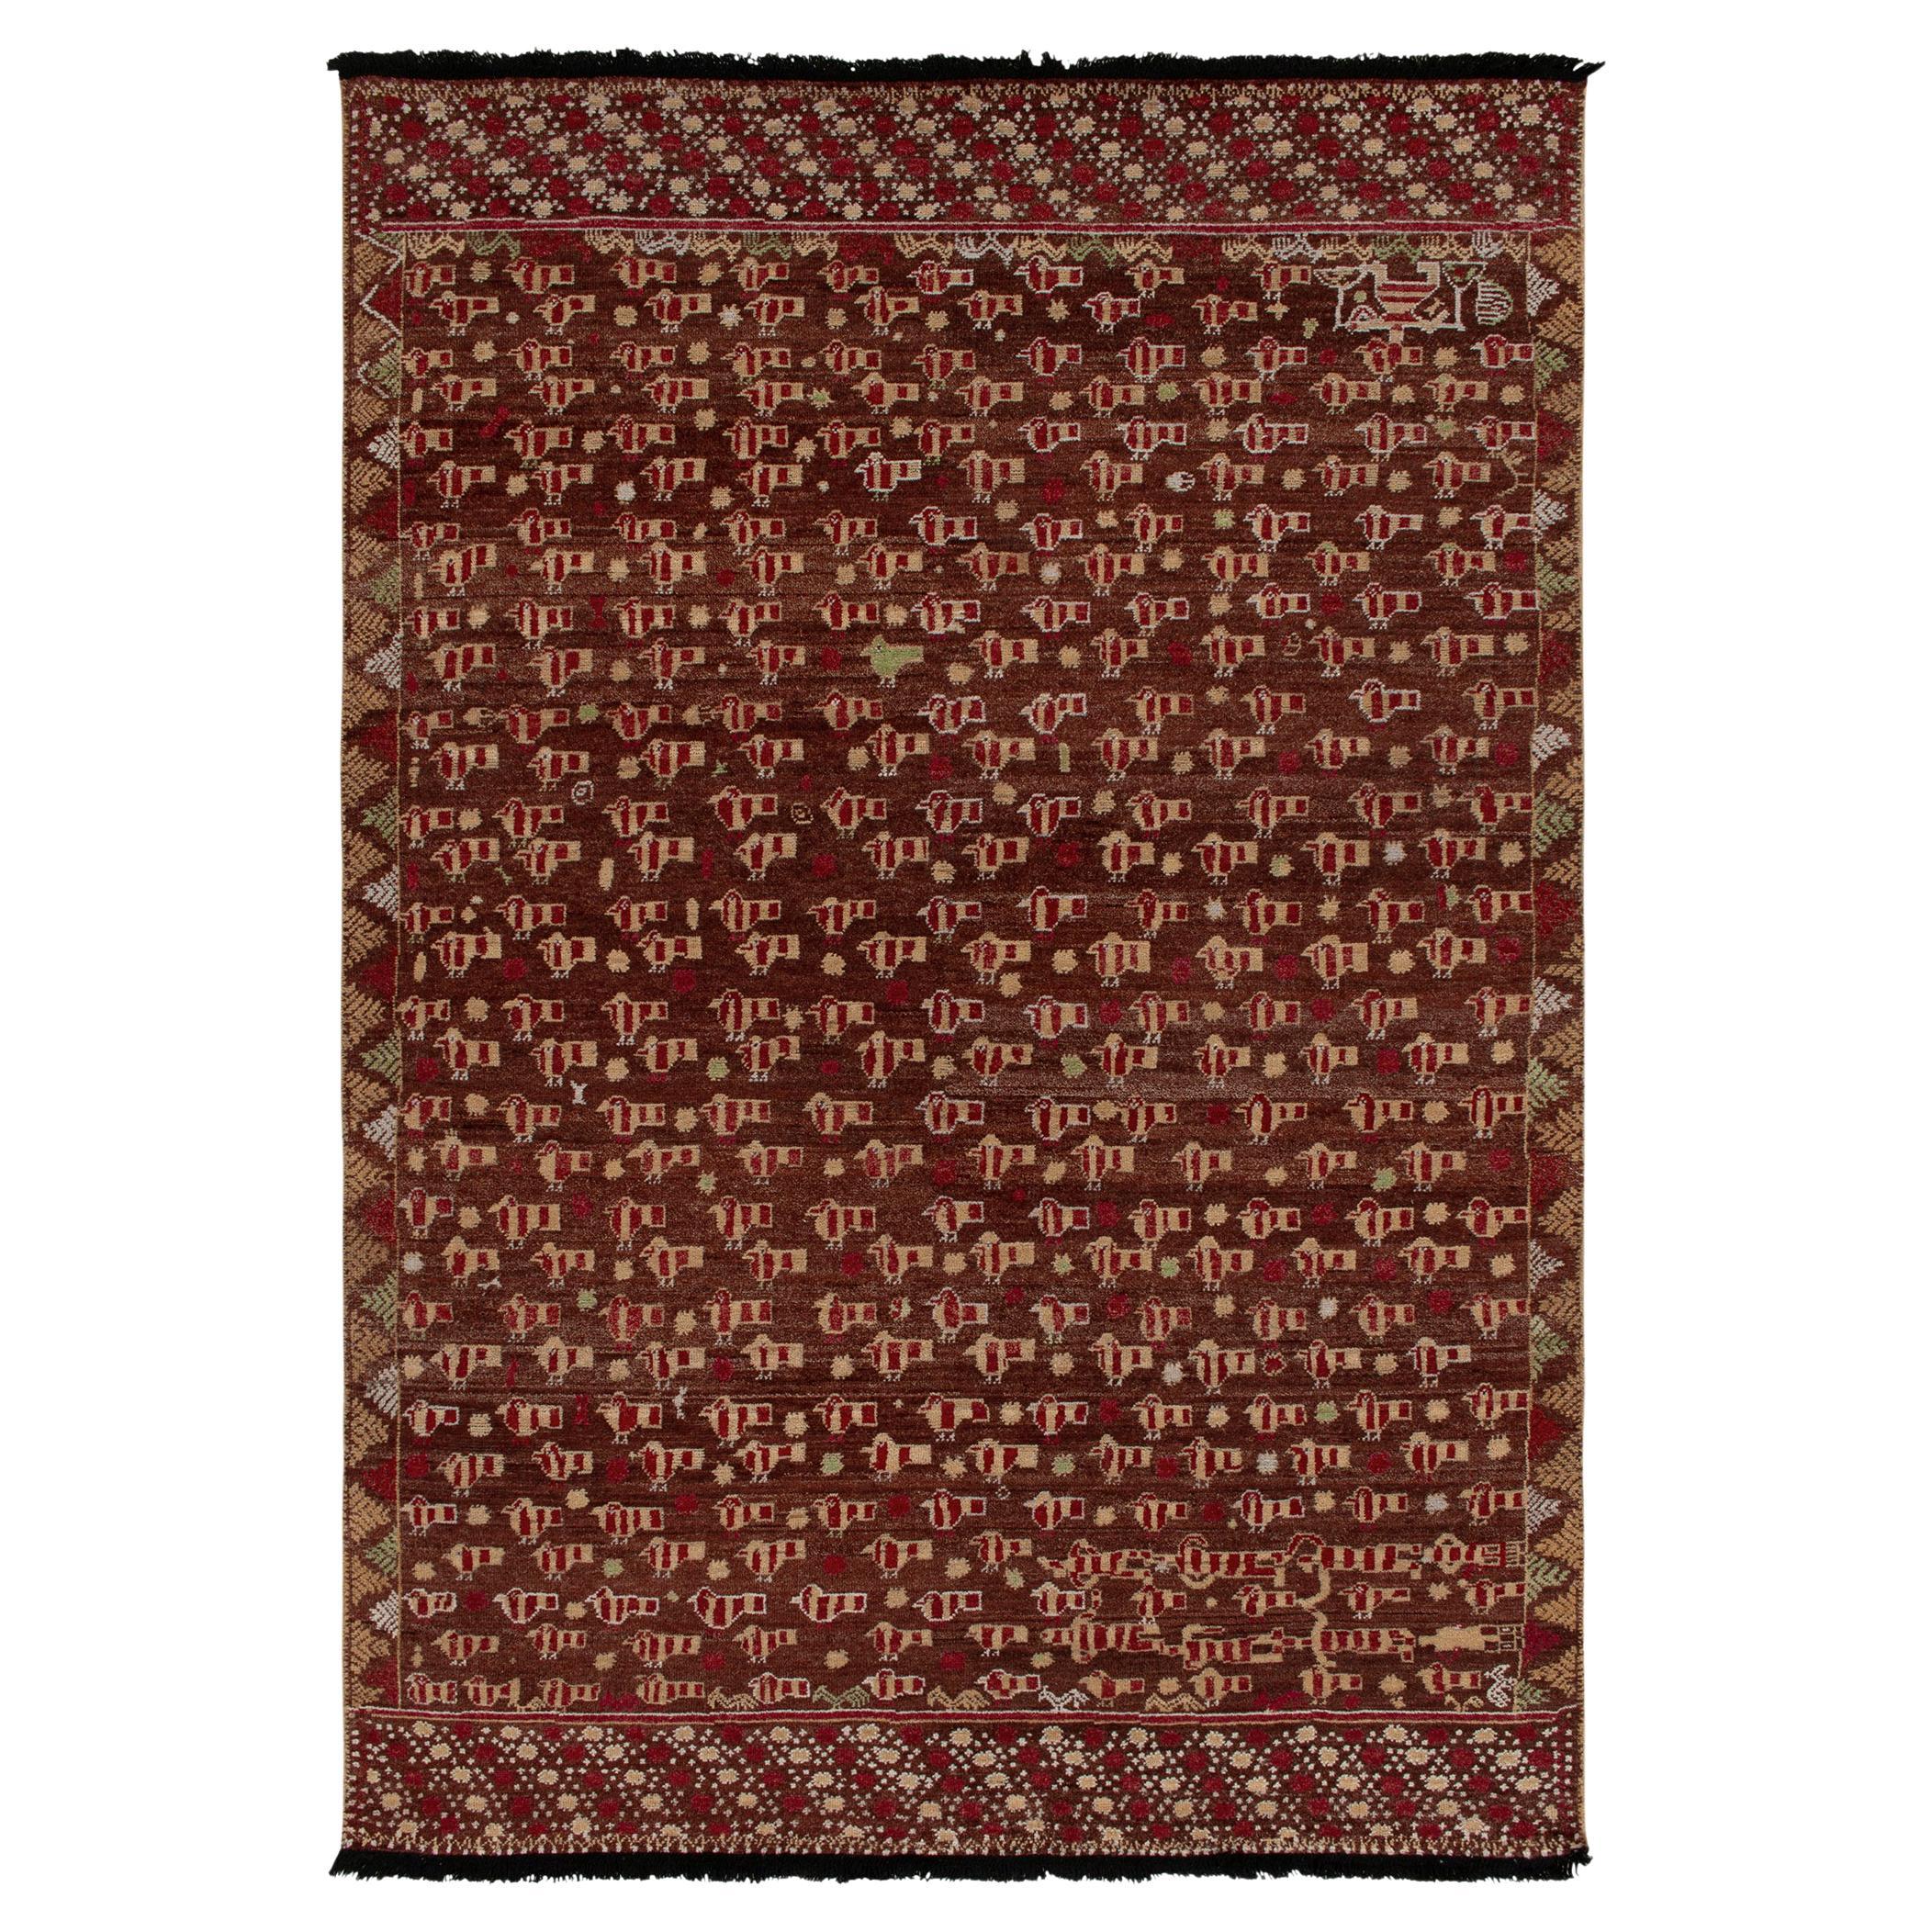 Rug & Kilim's Phulkari-Stil Teppich in Rot, Brown, Beige Bild-Muster